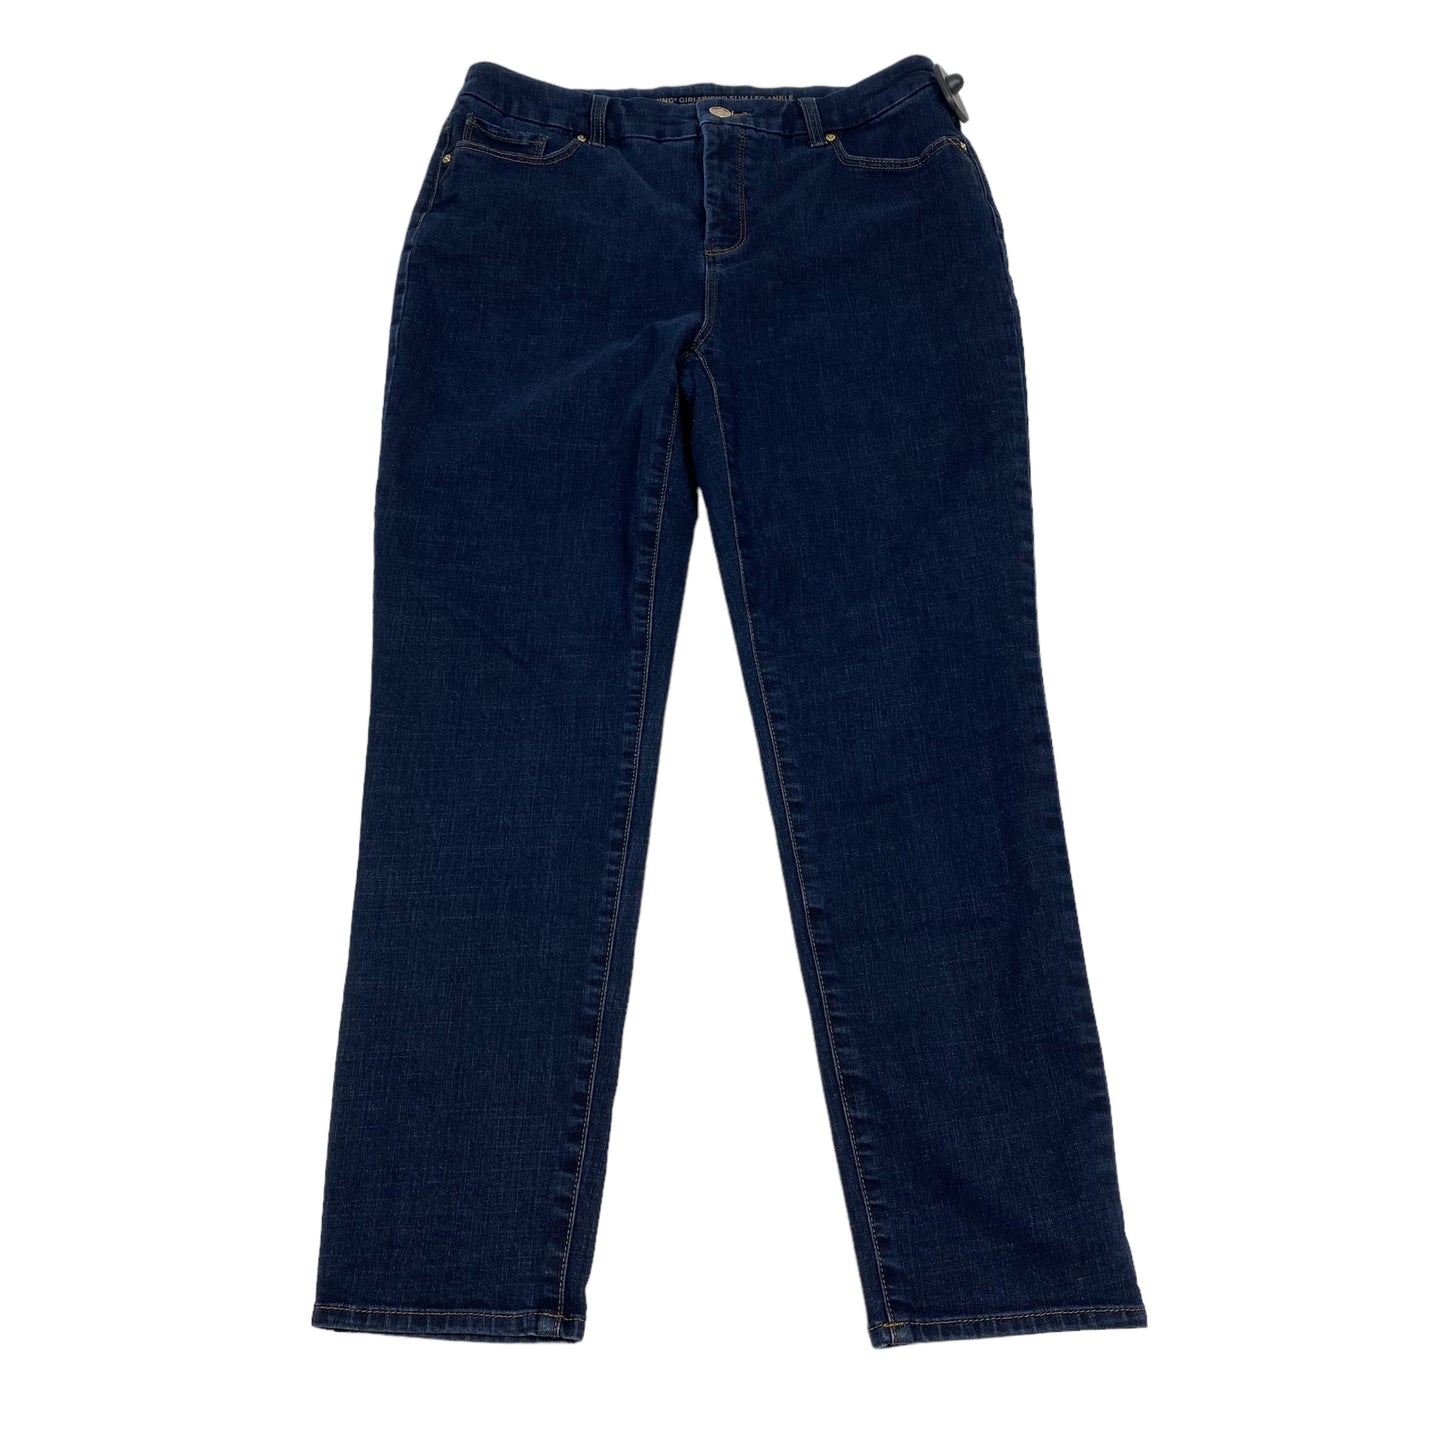 Beige Jeans Skinny Chicos, Size 8